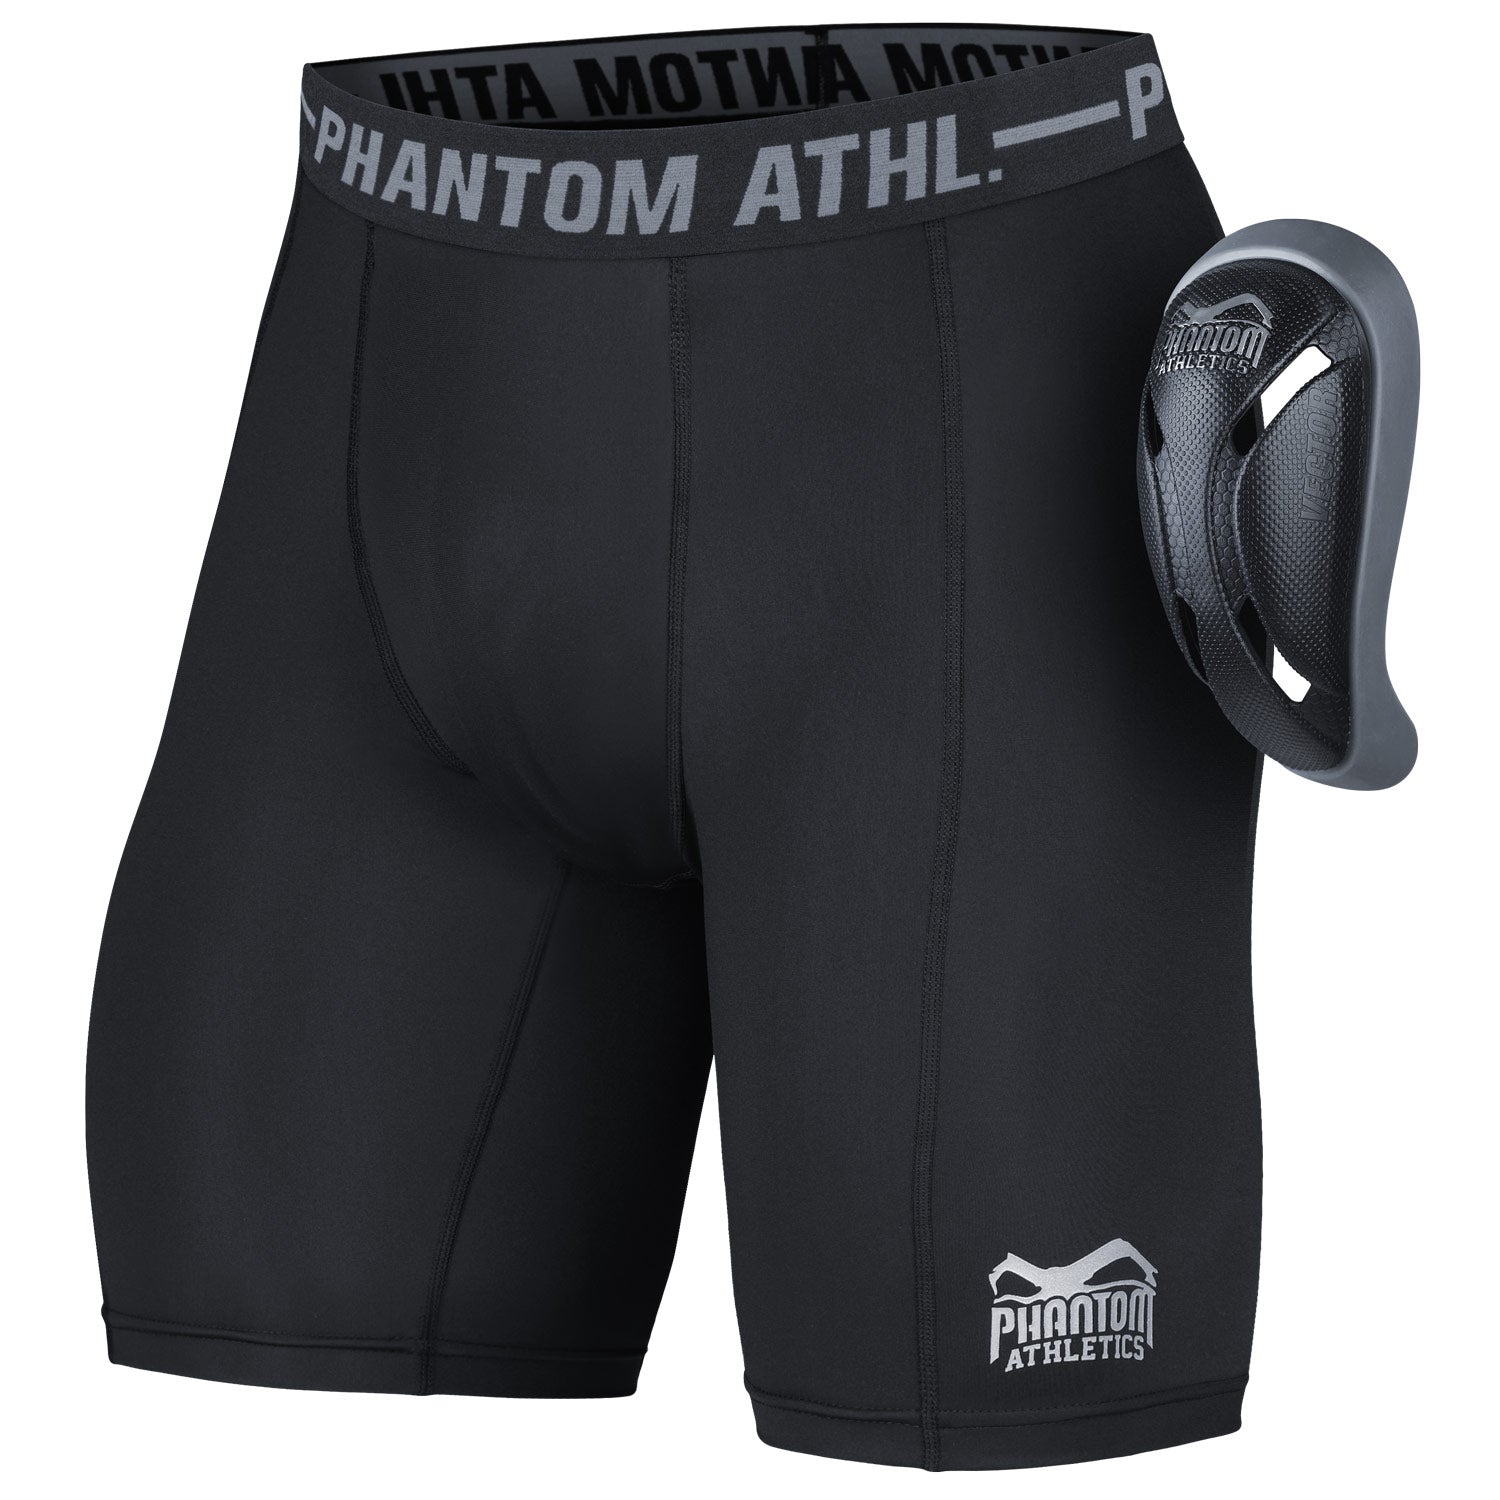 Tiefschutz Shorts Vector mit Cup - PHANTOM ATHLETICS